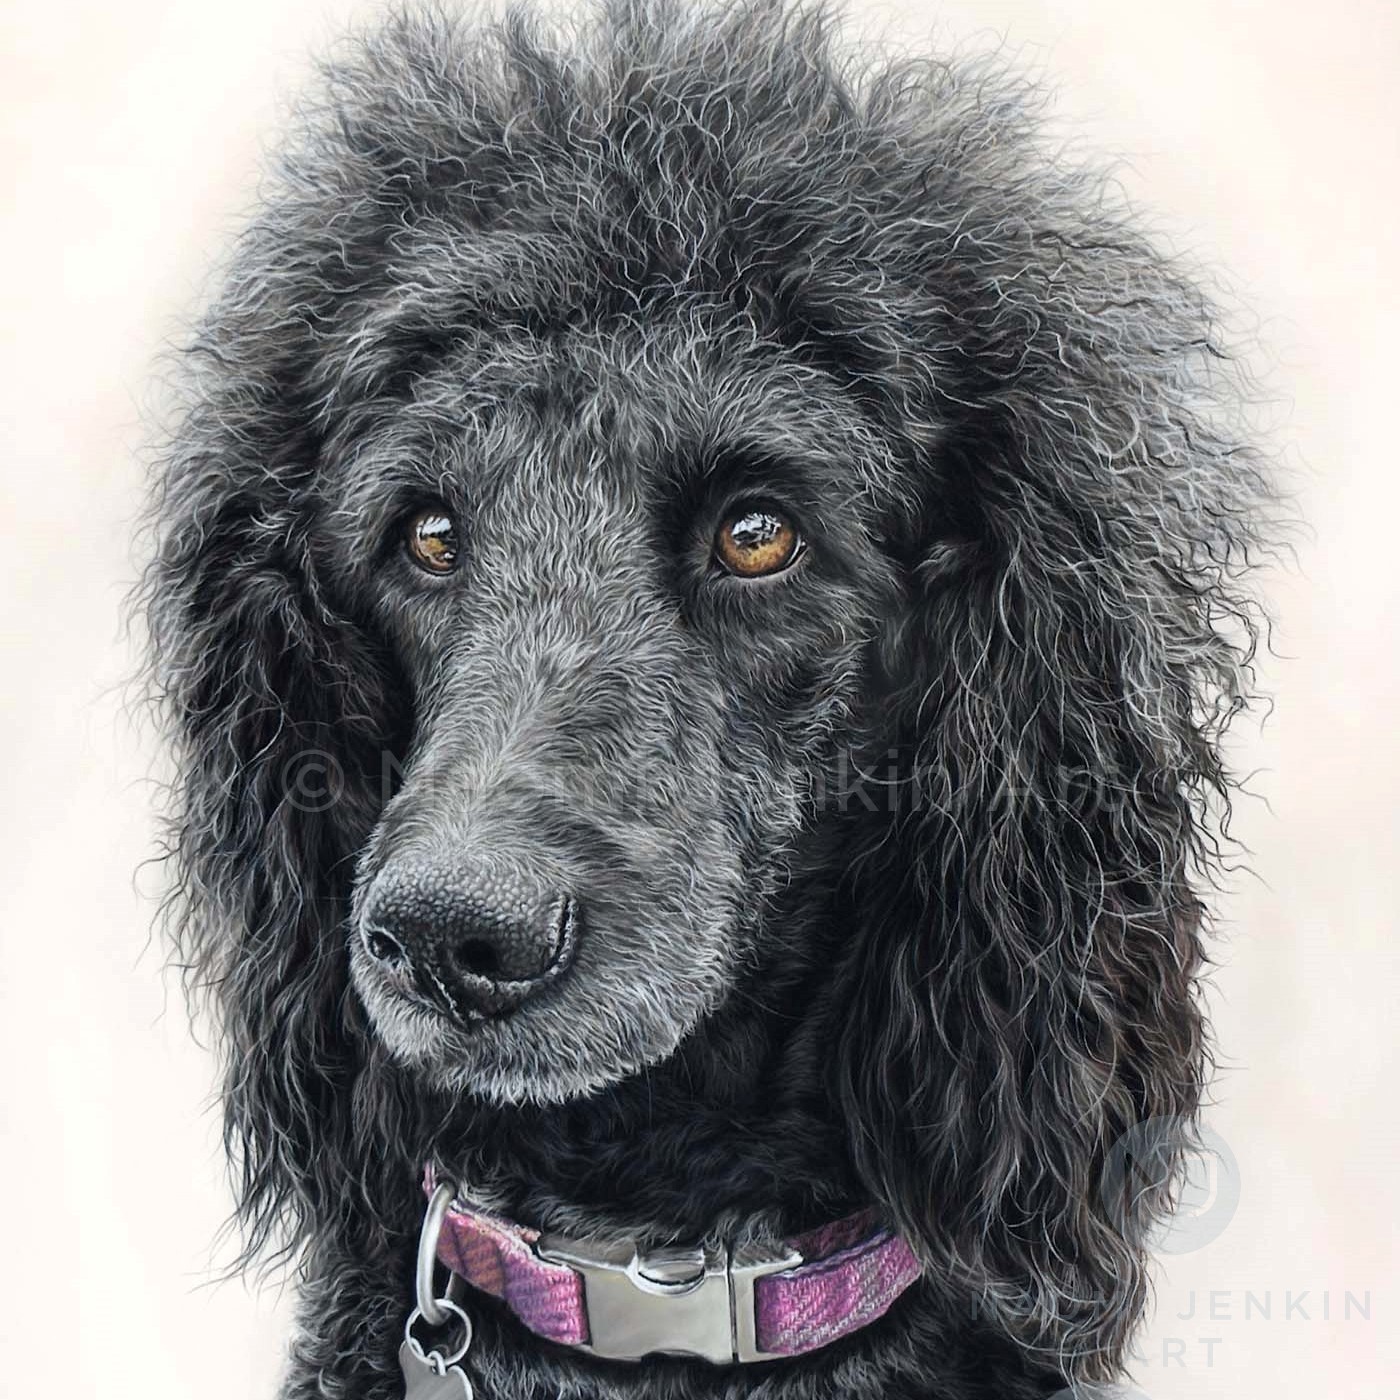 Goldedoodle portrait by dog portrait artist Naomi Jenkin. 